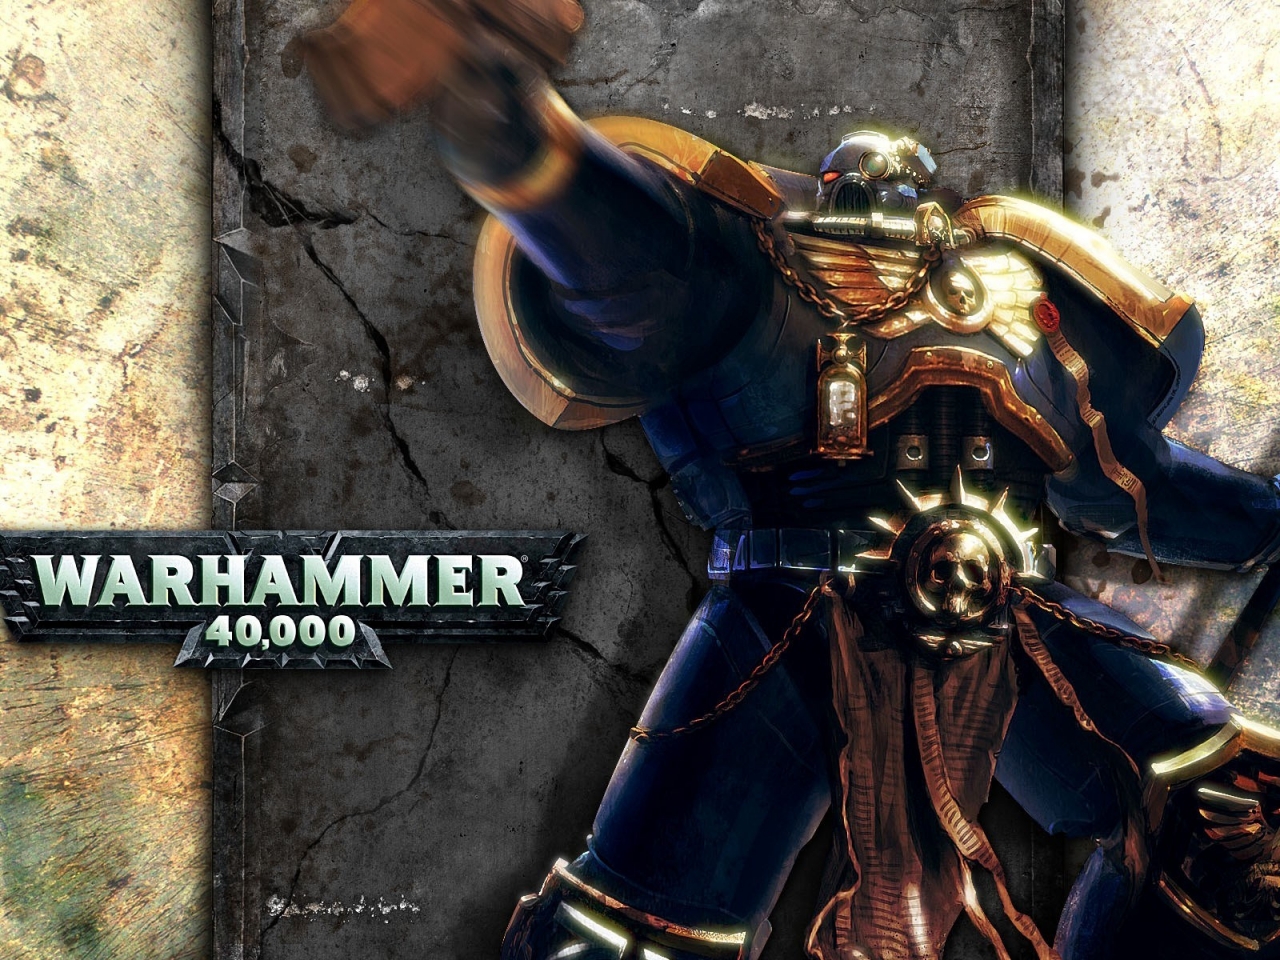 Warhammer 40k Poster for 1280 x 960 resolution